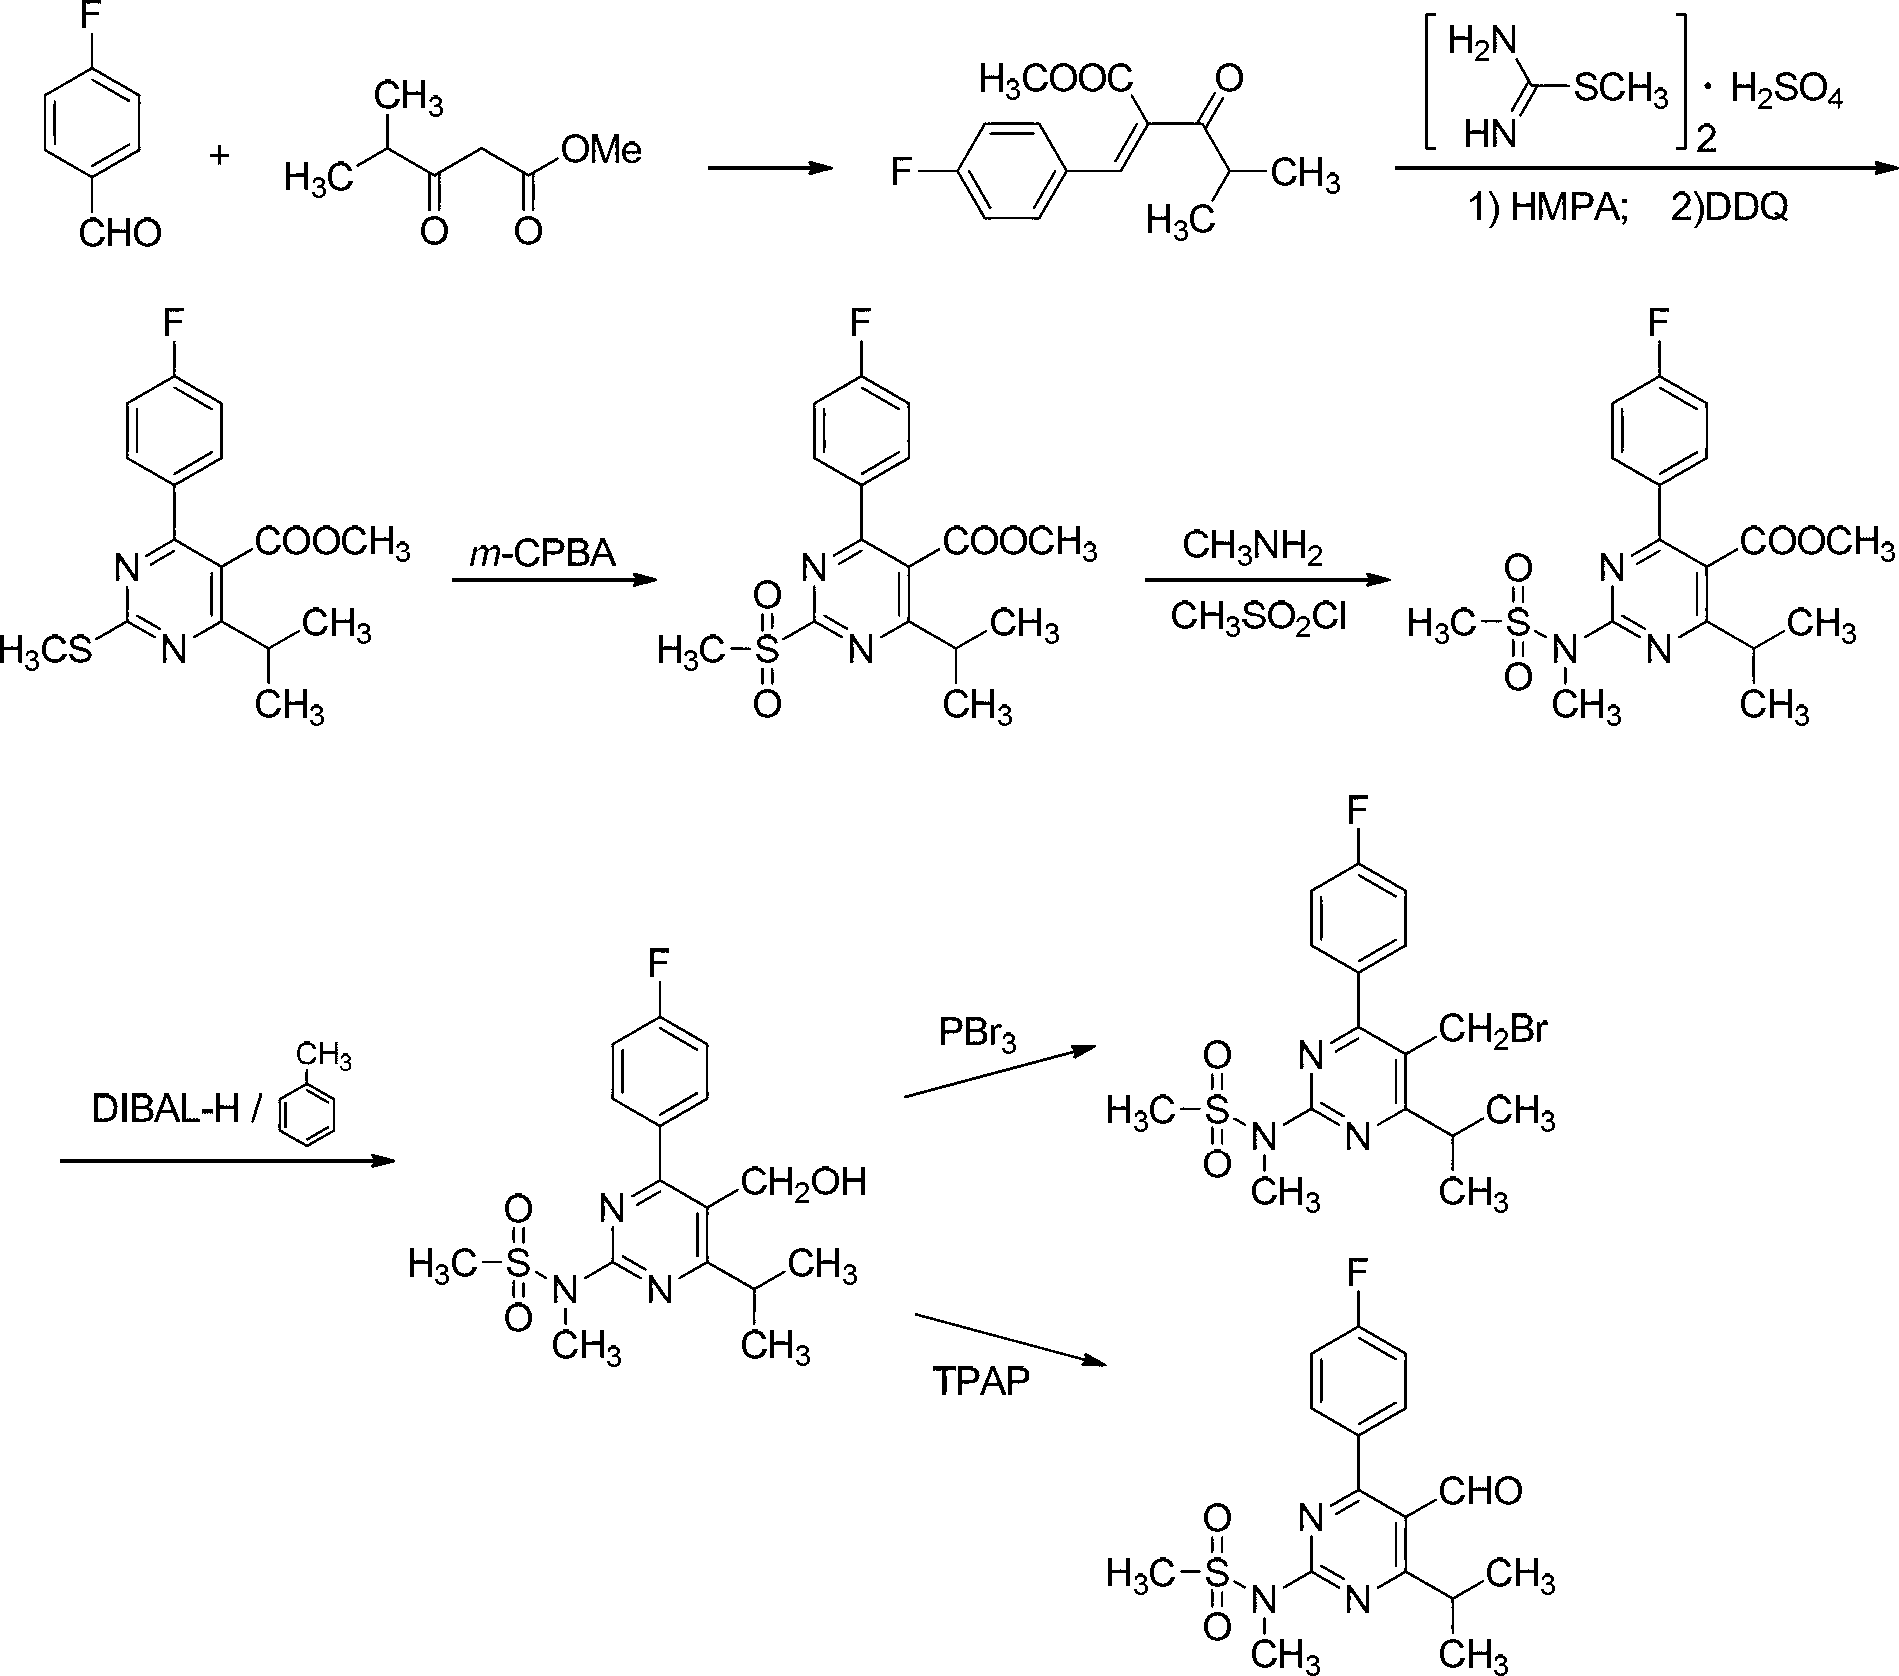 Method for preparing rosuvastatin calcium intermediate containing brooethyl, hydroxymethyl or formyl